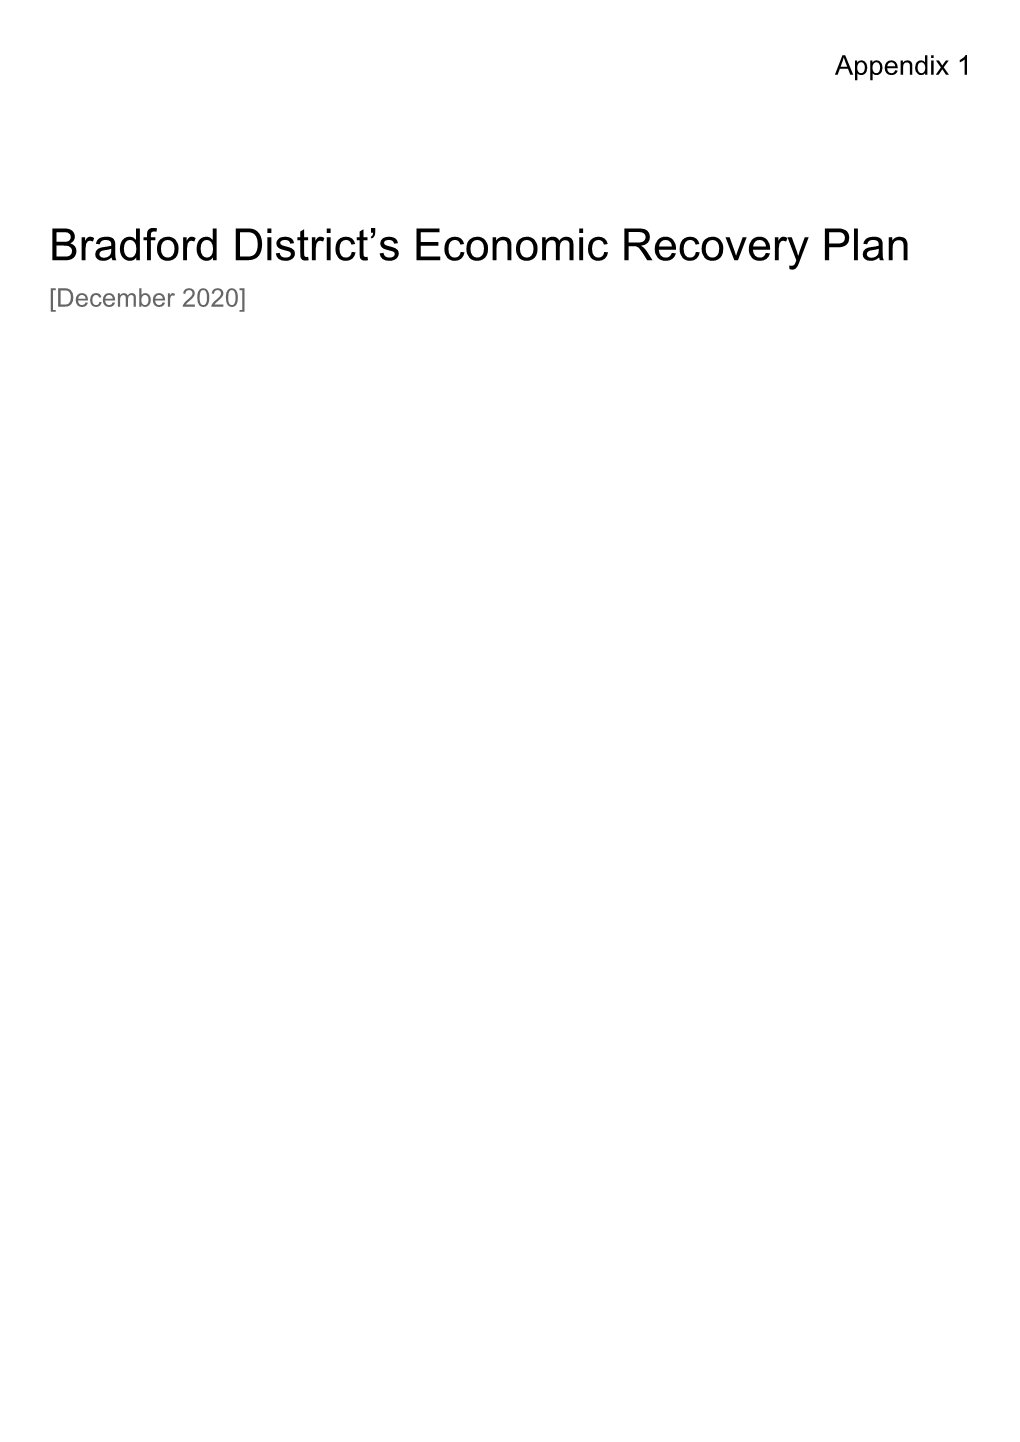 Bradford District's Economic Recovery Plan